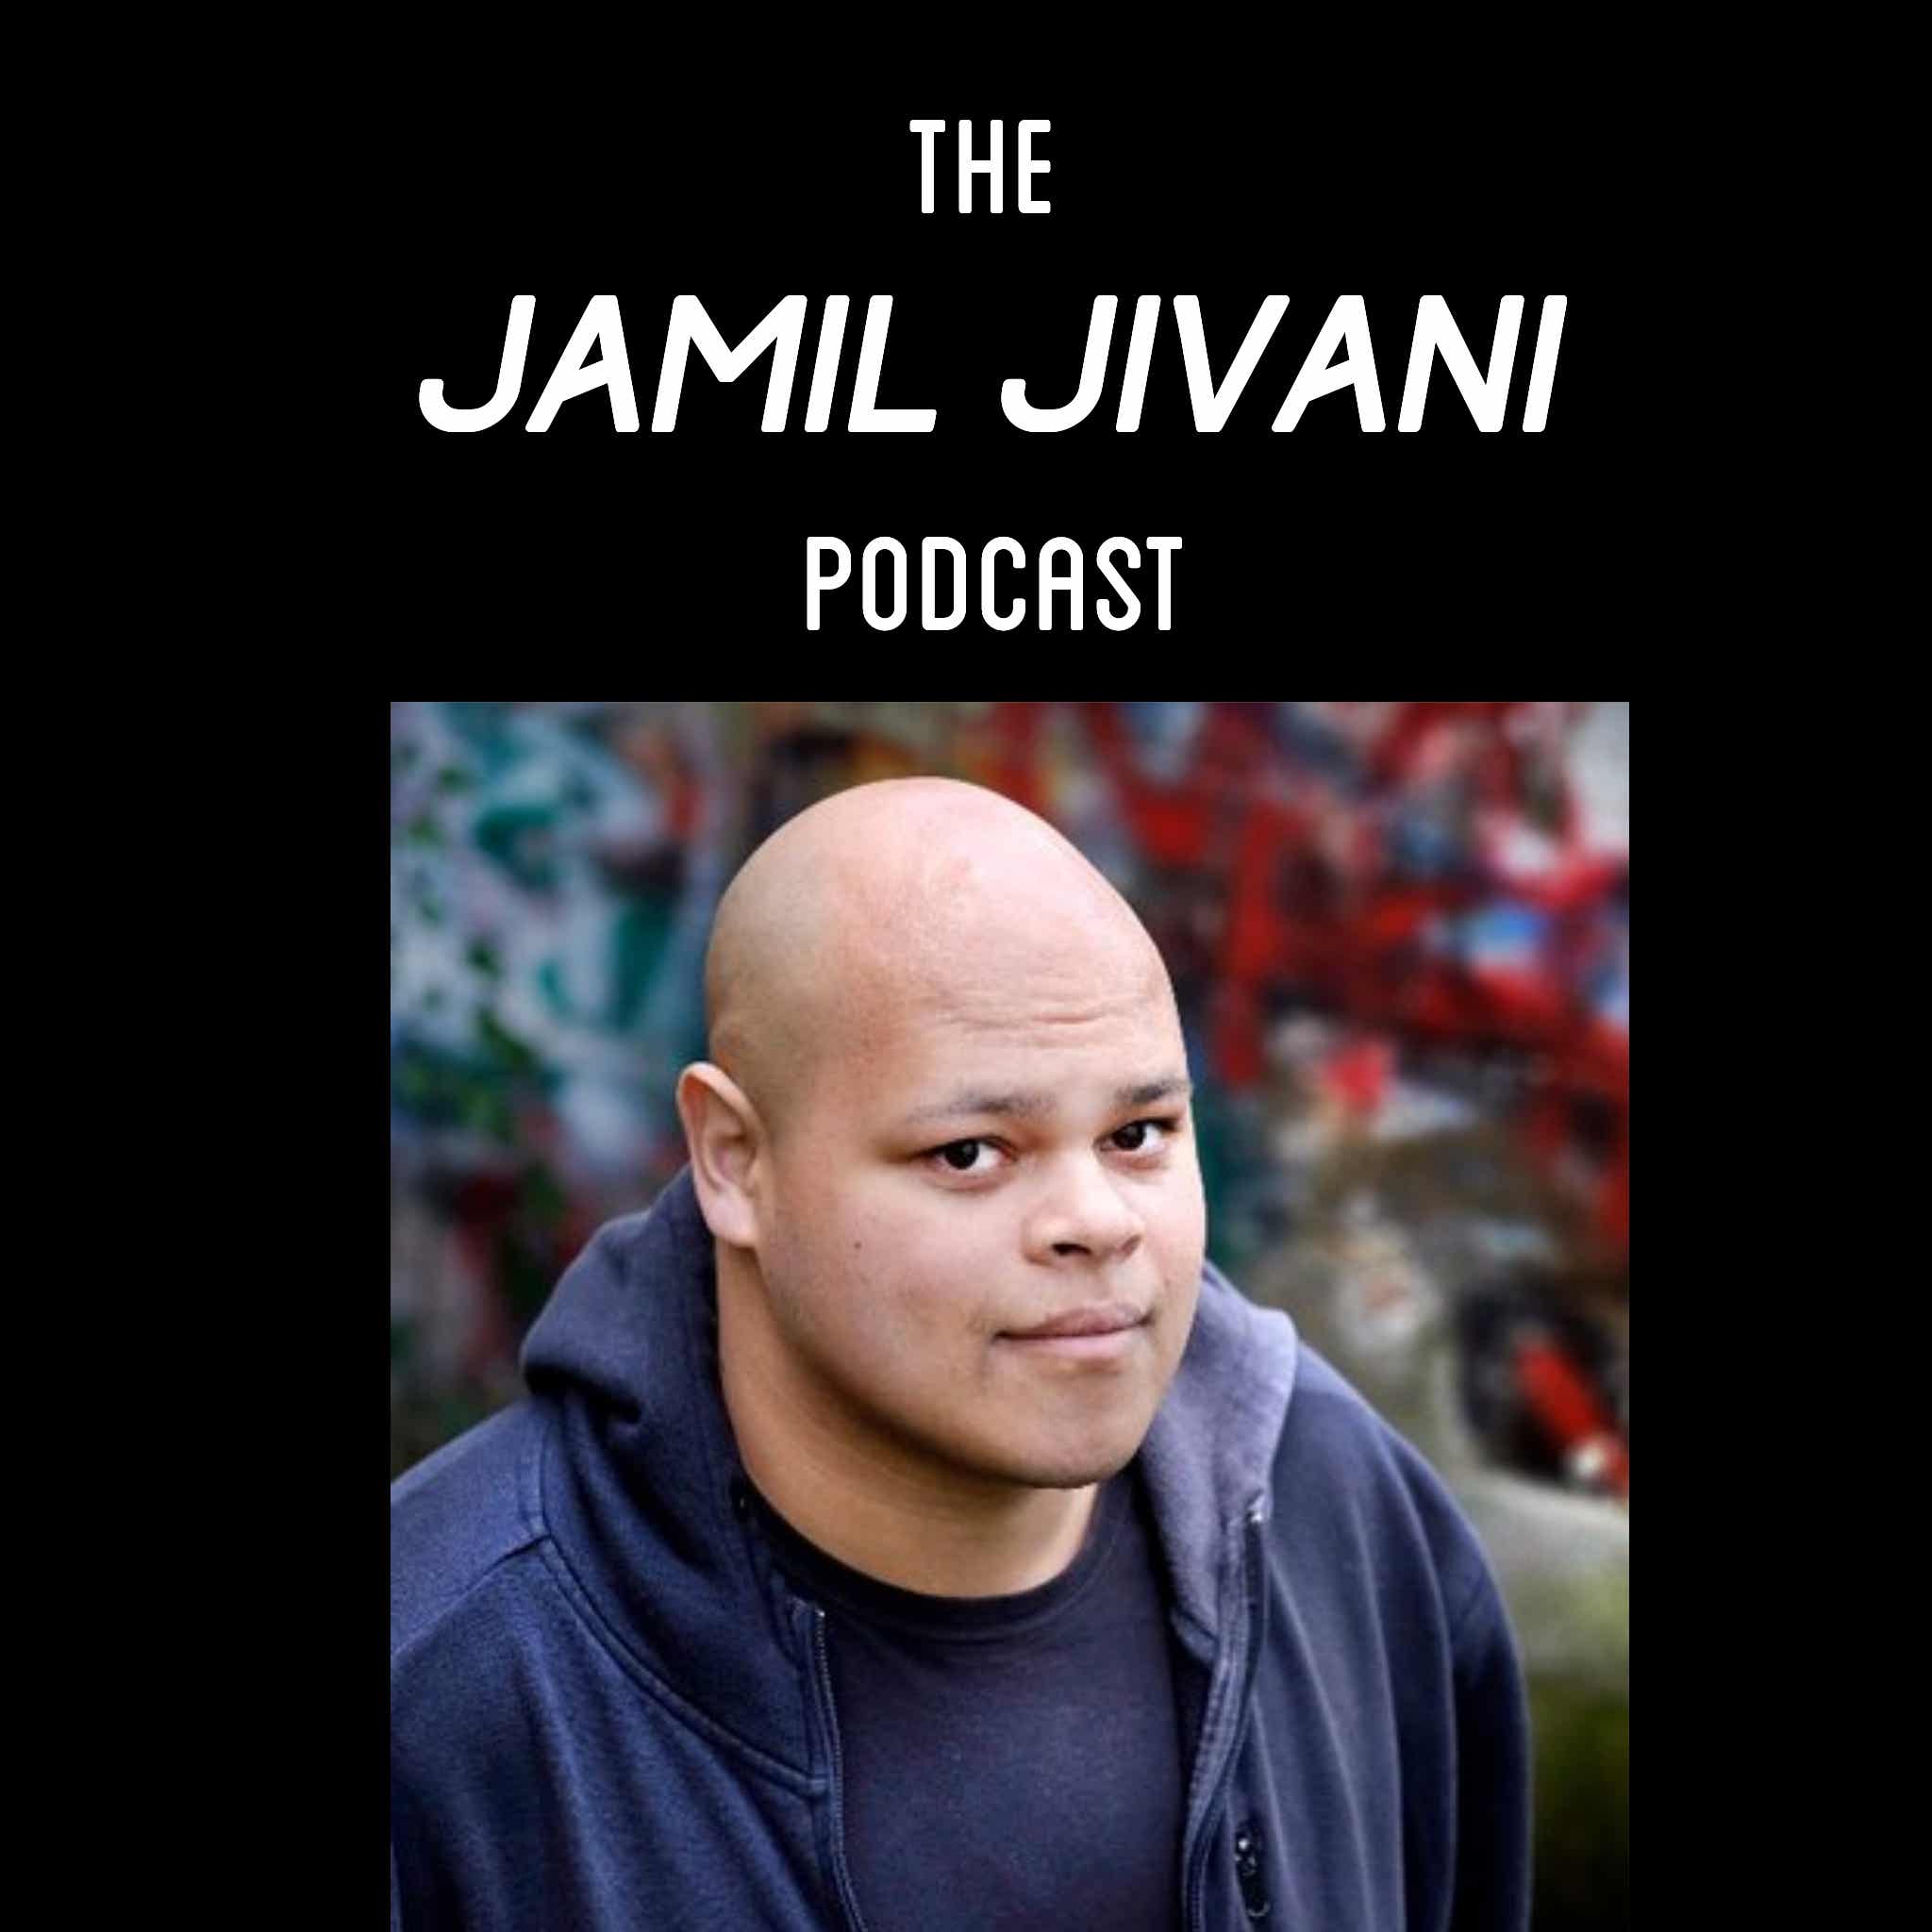 The Jamil Jivani Podcast (private feed for emina.akbari@gmail.com)